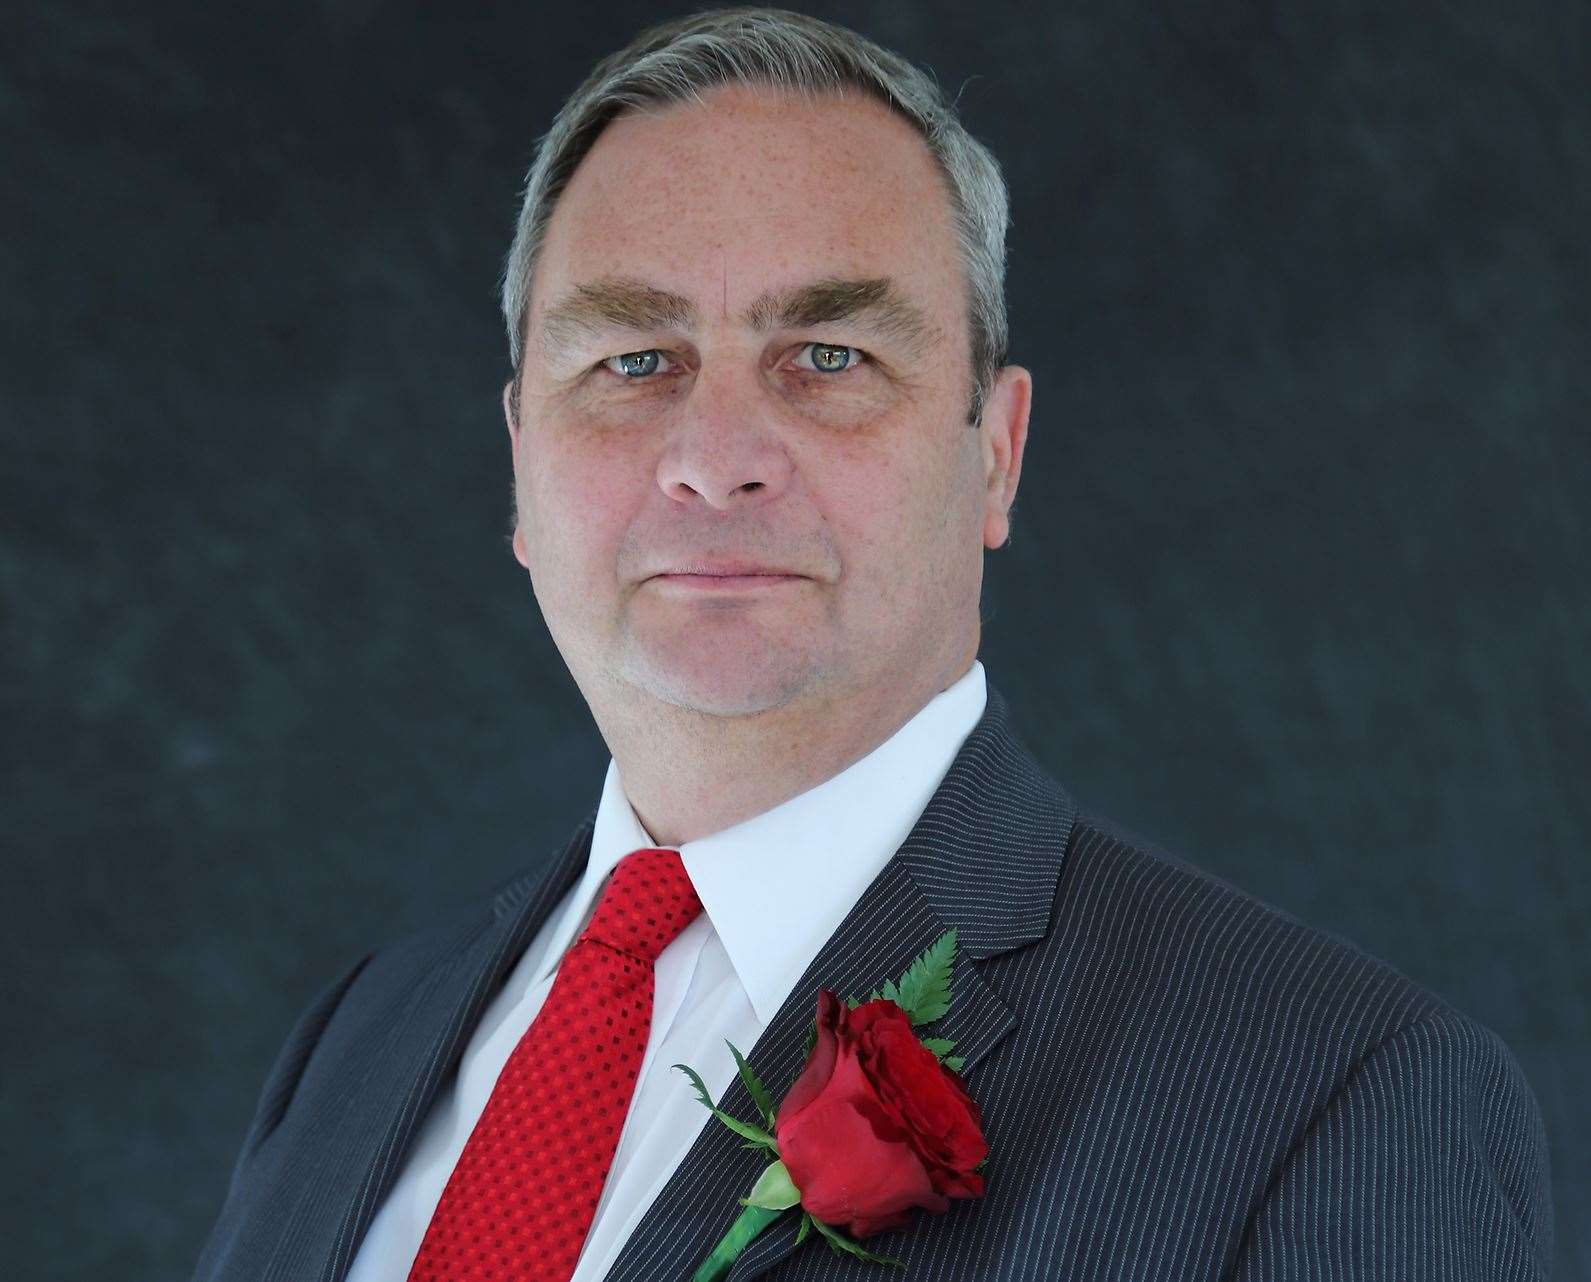 Cllr John Burden, leader of Gravesham Borough Council